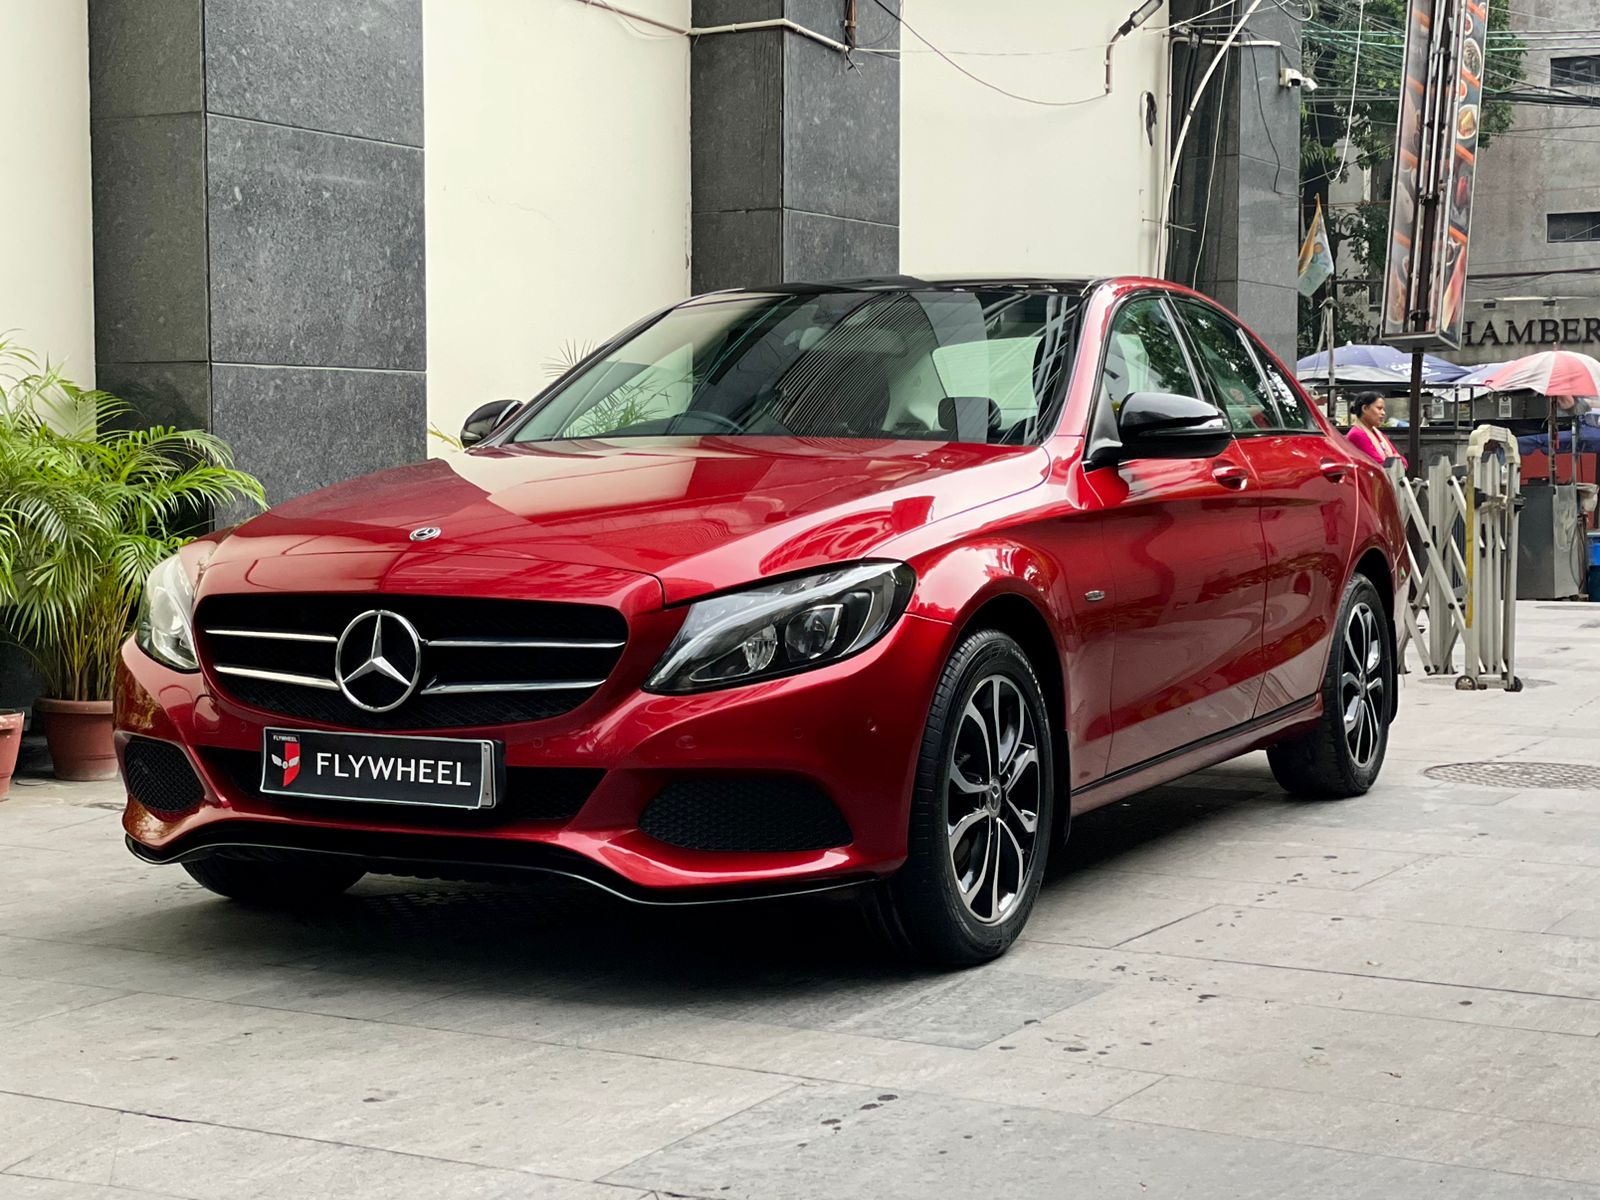 Uncover Luxury: 2018 Mercedes Benz C220 D Features